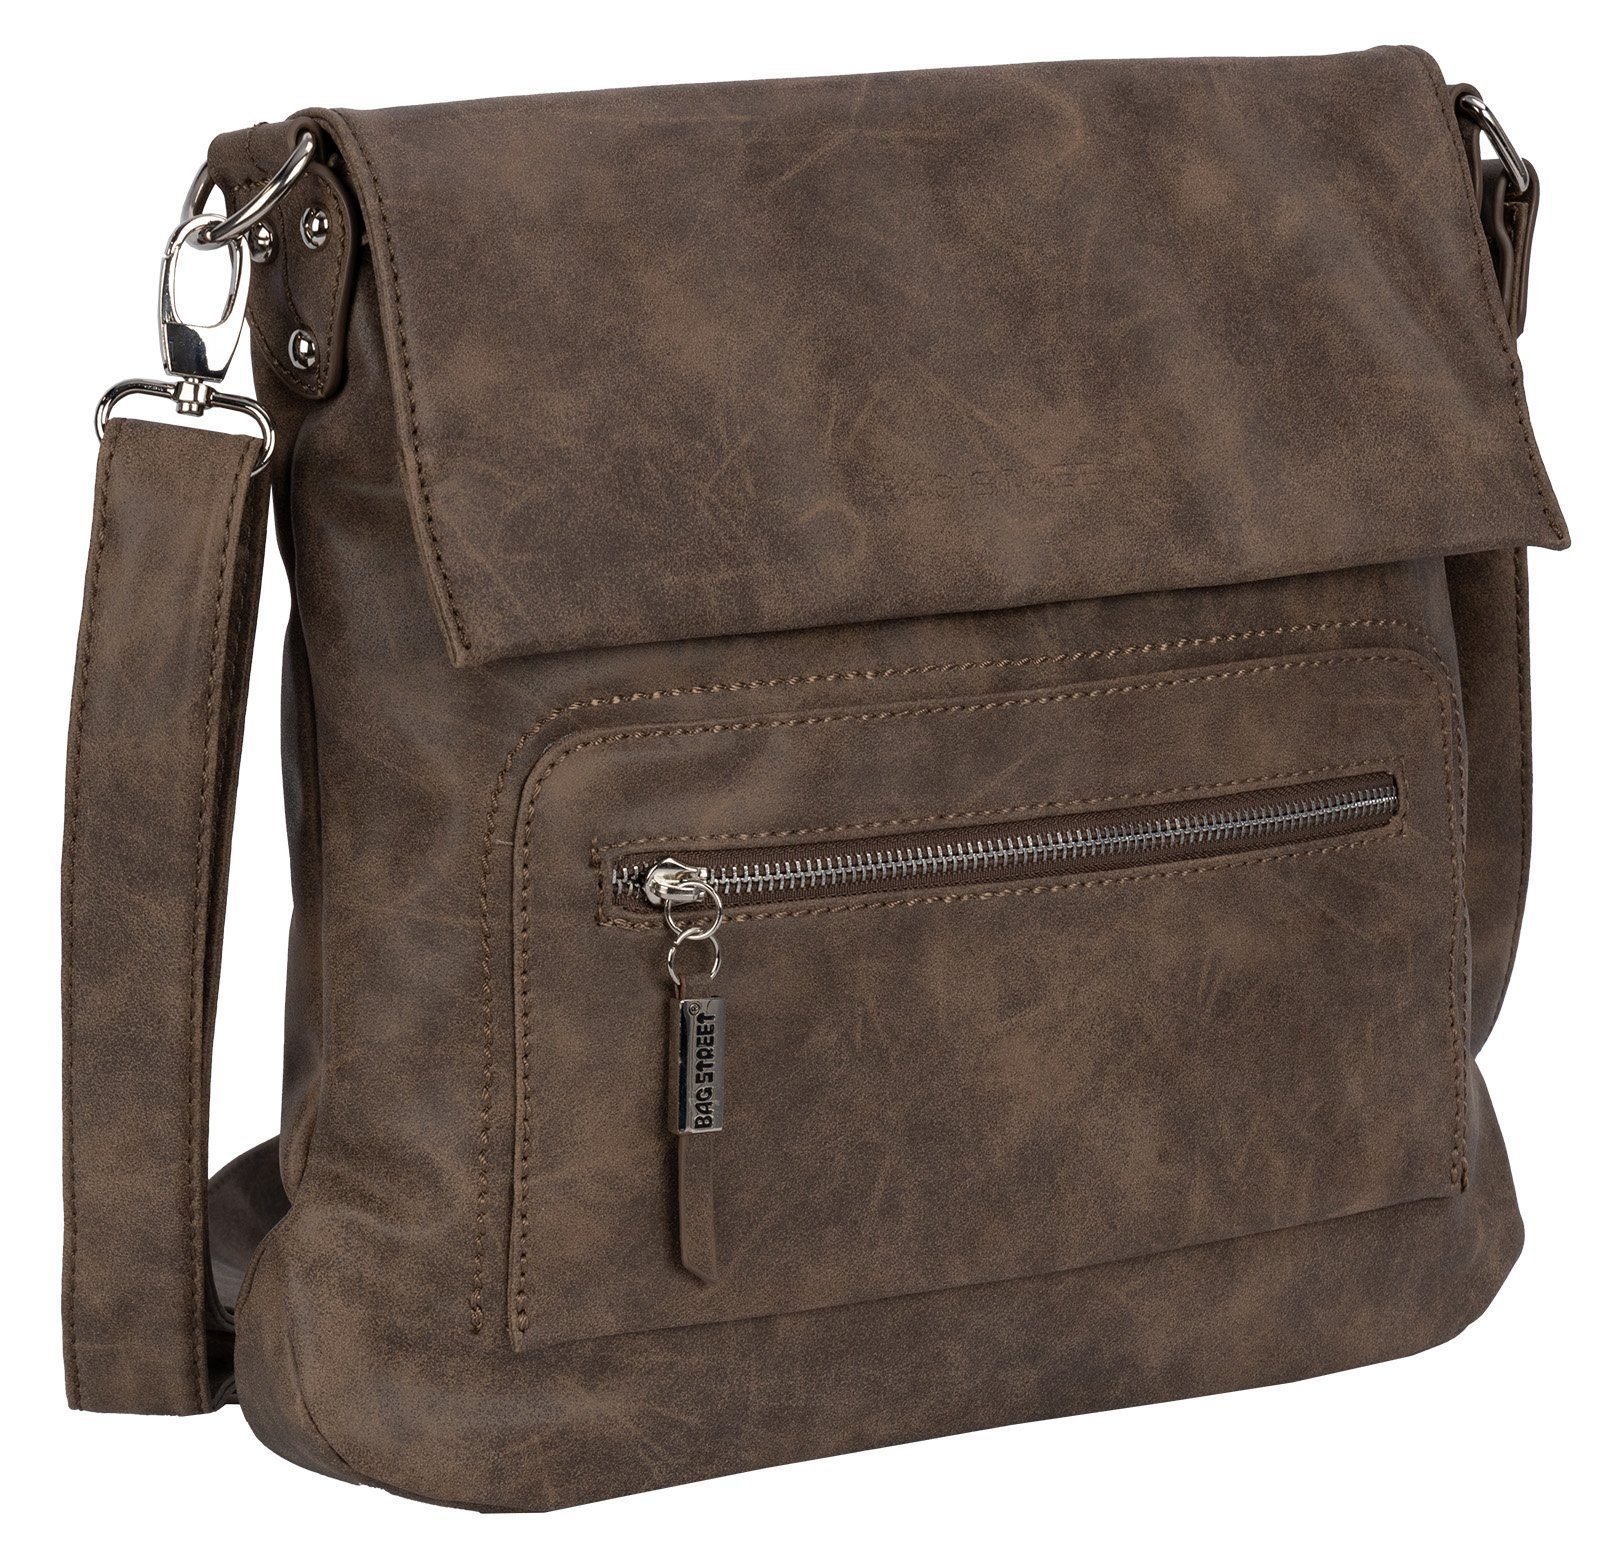 BAG STREET Schlüsseltasche Bag Street Damentasche Umhängetasche Handtasche Schultertasche T0103, als Schultertasche, Umhängetasche tragbar BRAUN | Schlüsseltaschen